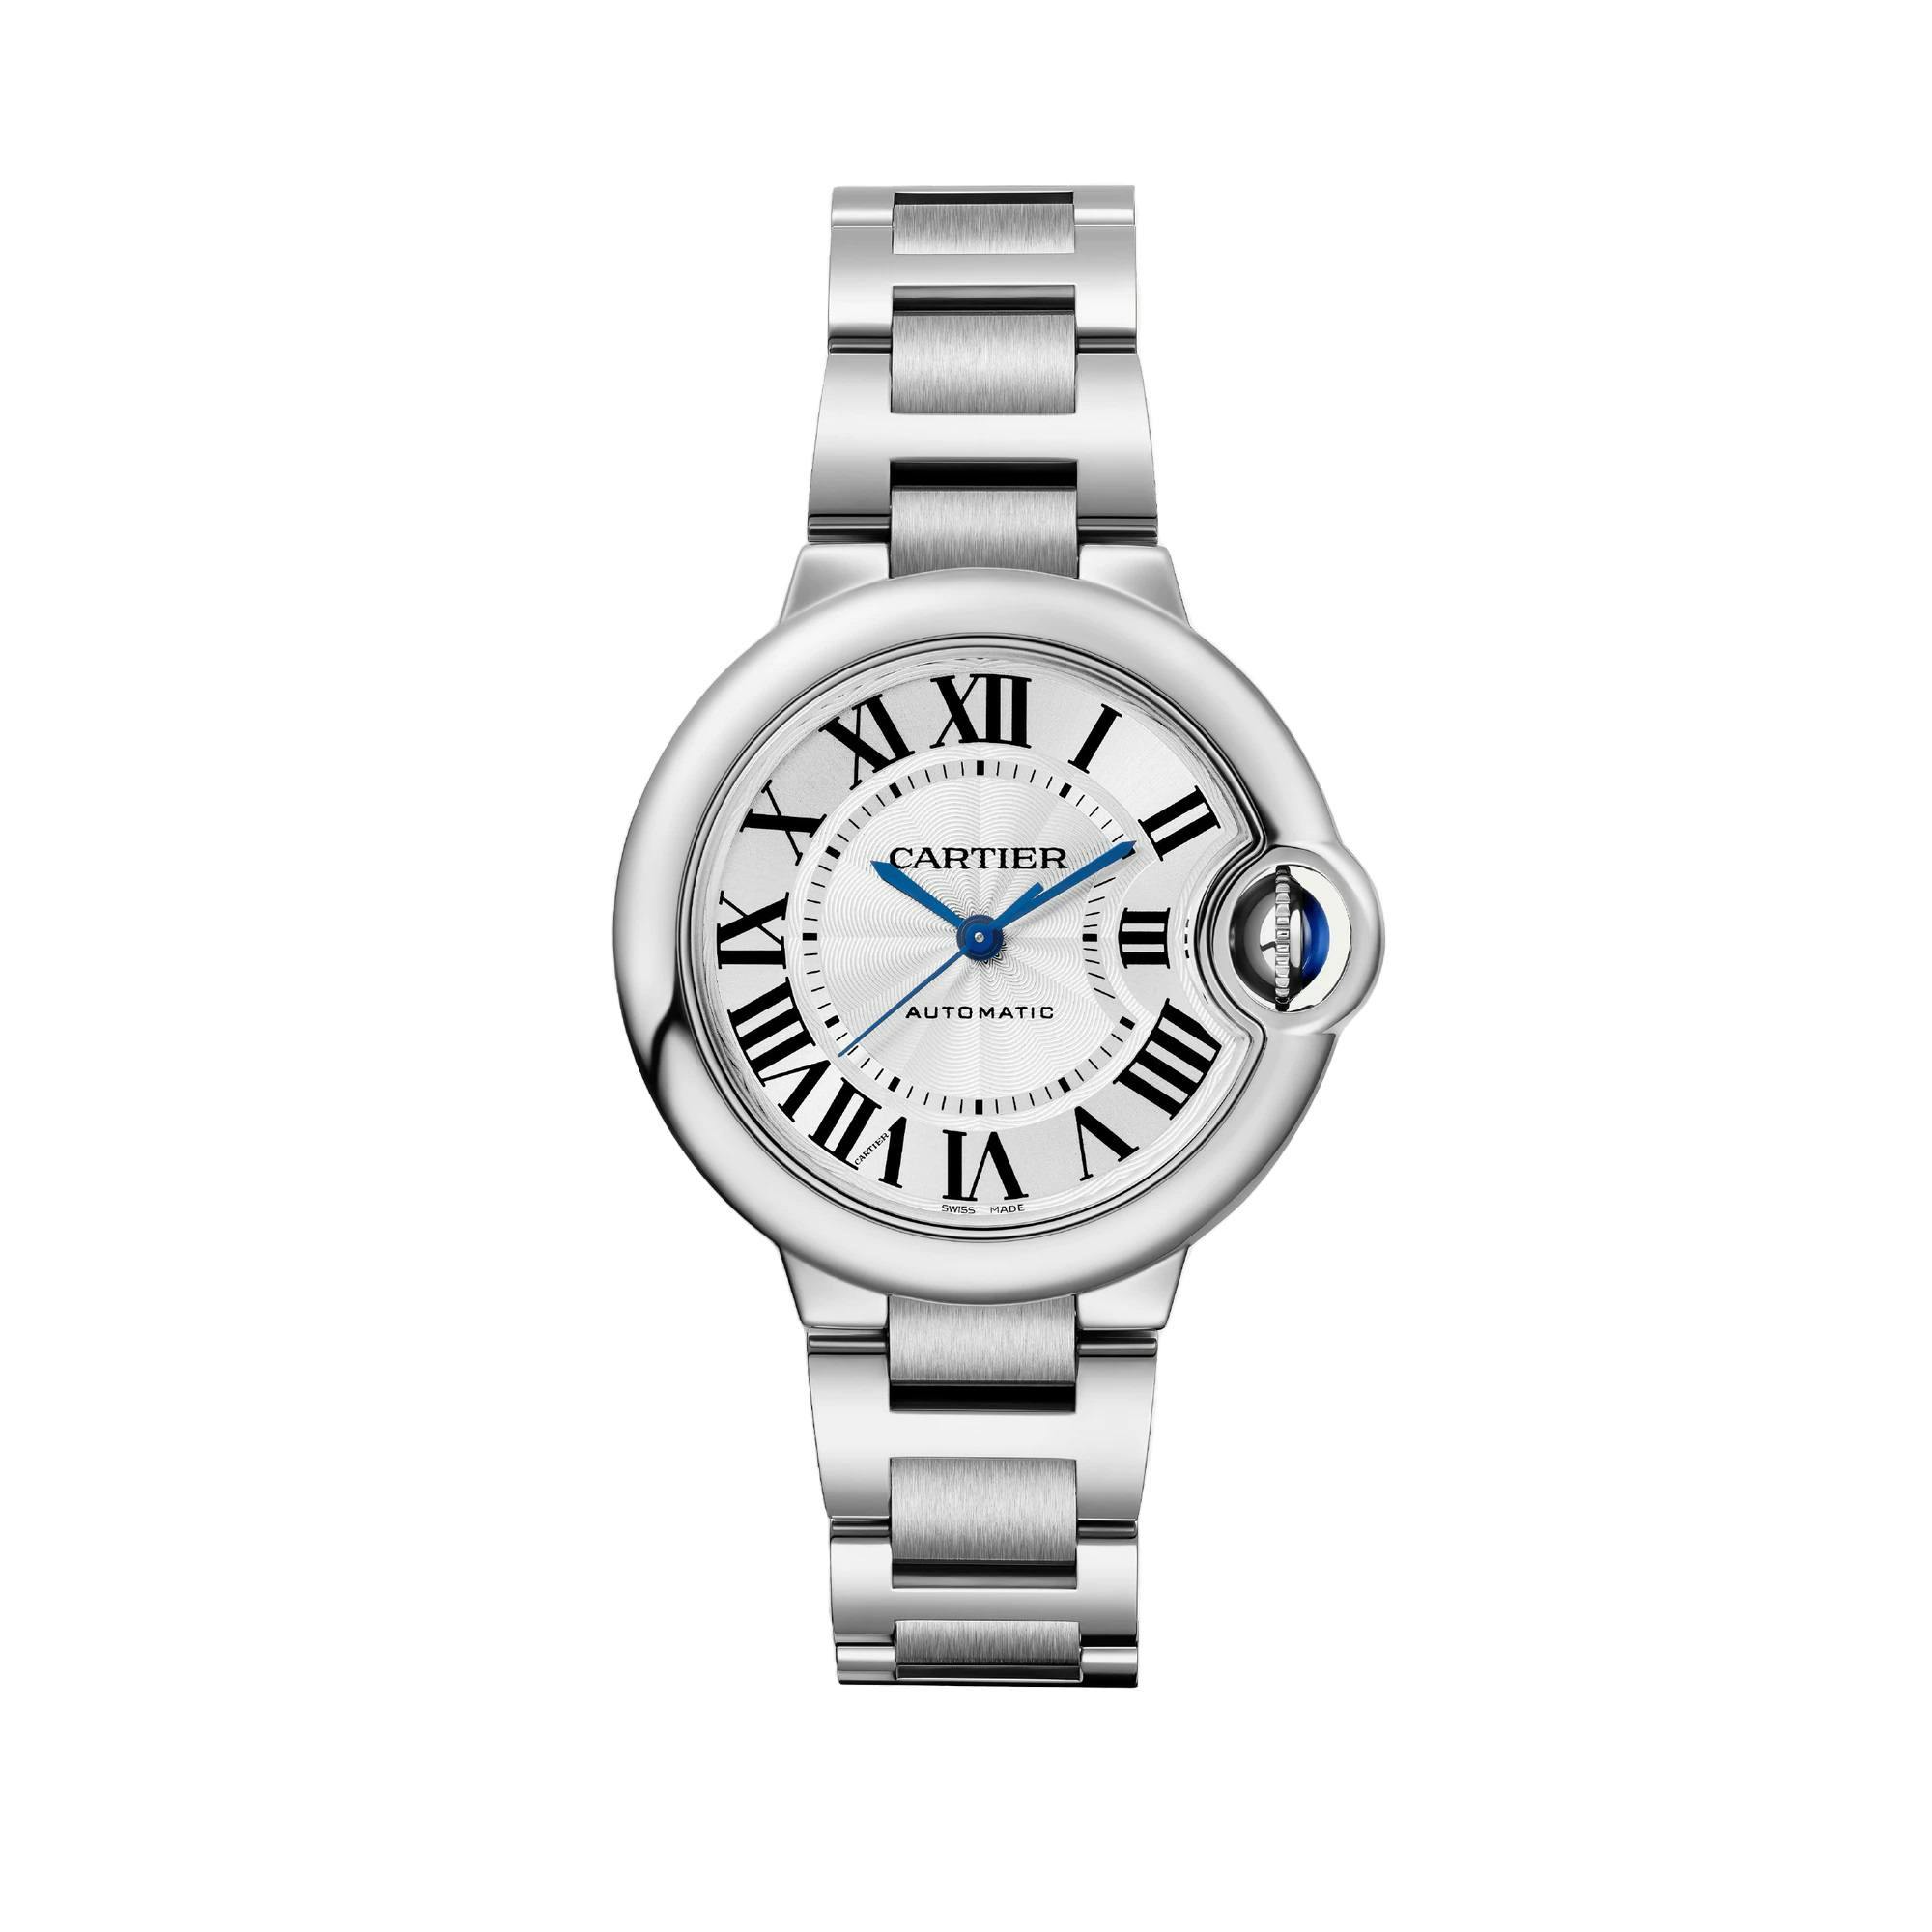 Ballon Bleu de Cartier Watch, Silver Guilloche Dial, 33mm
